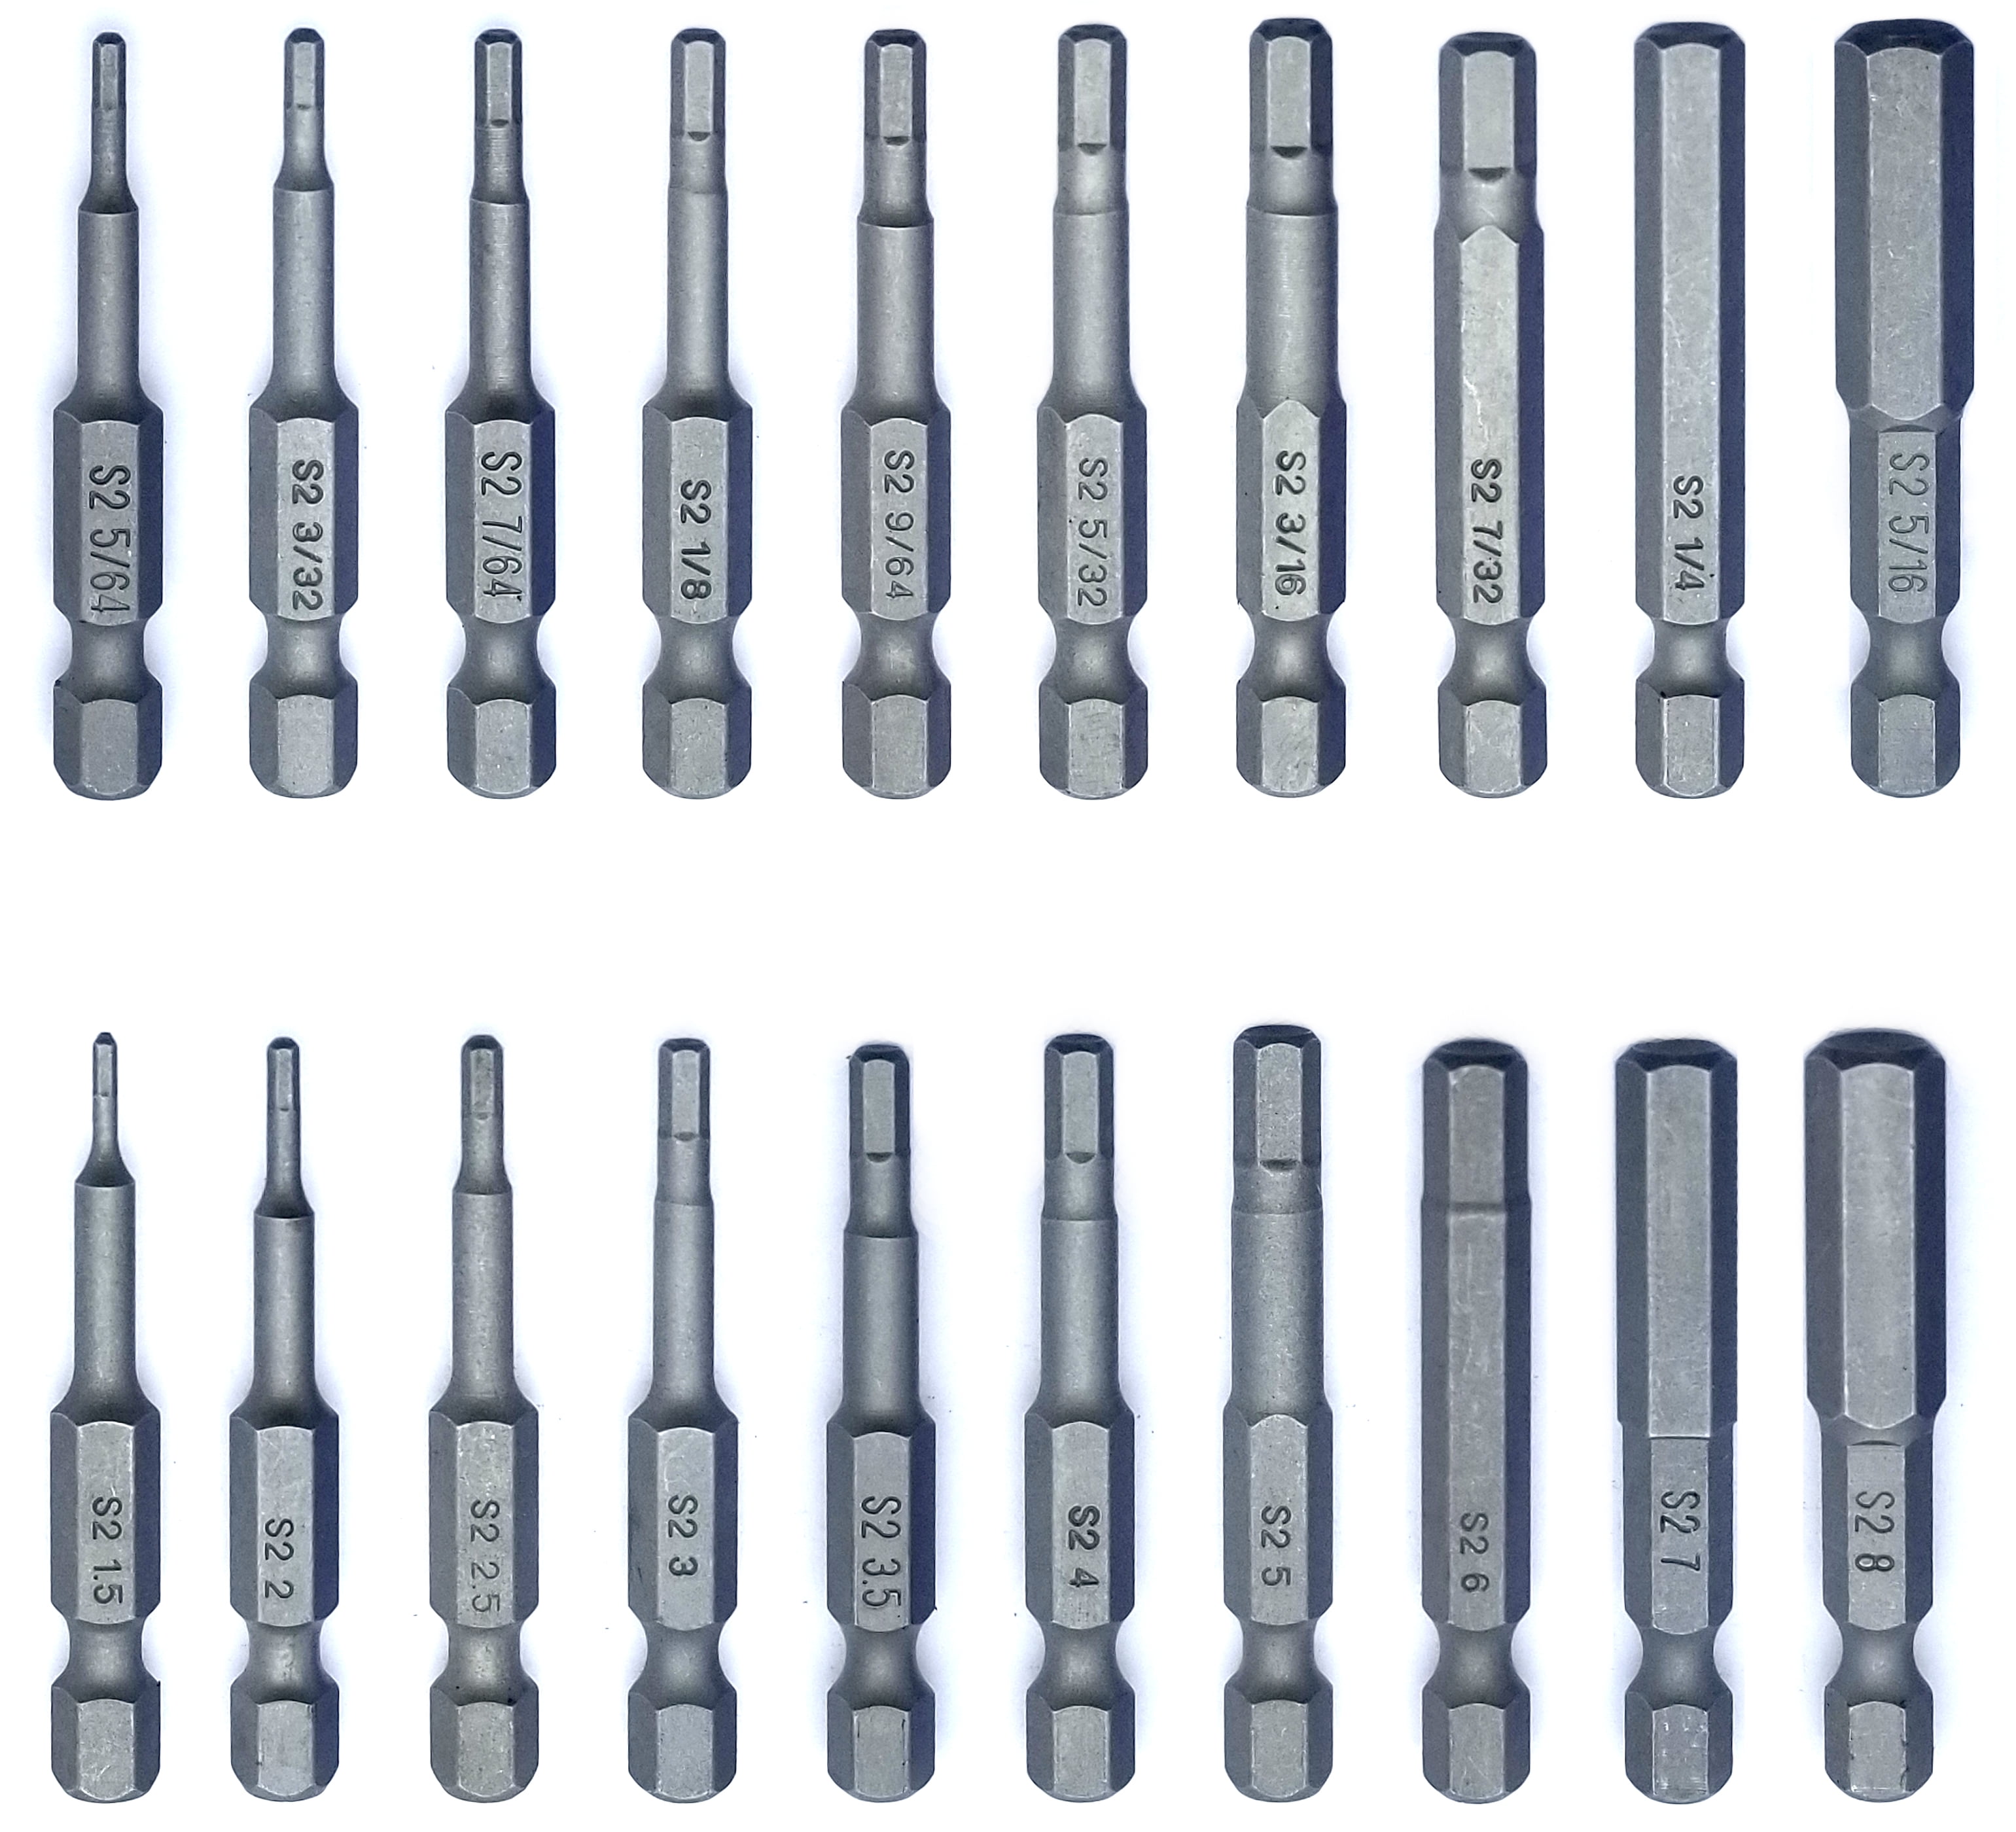 VETCO Magnetic Hex Allen Wrench Drill Bit Set (20 Piece) 